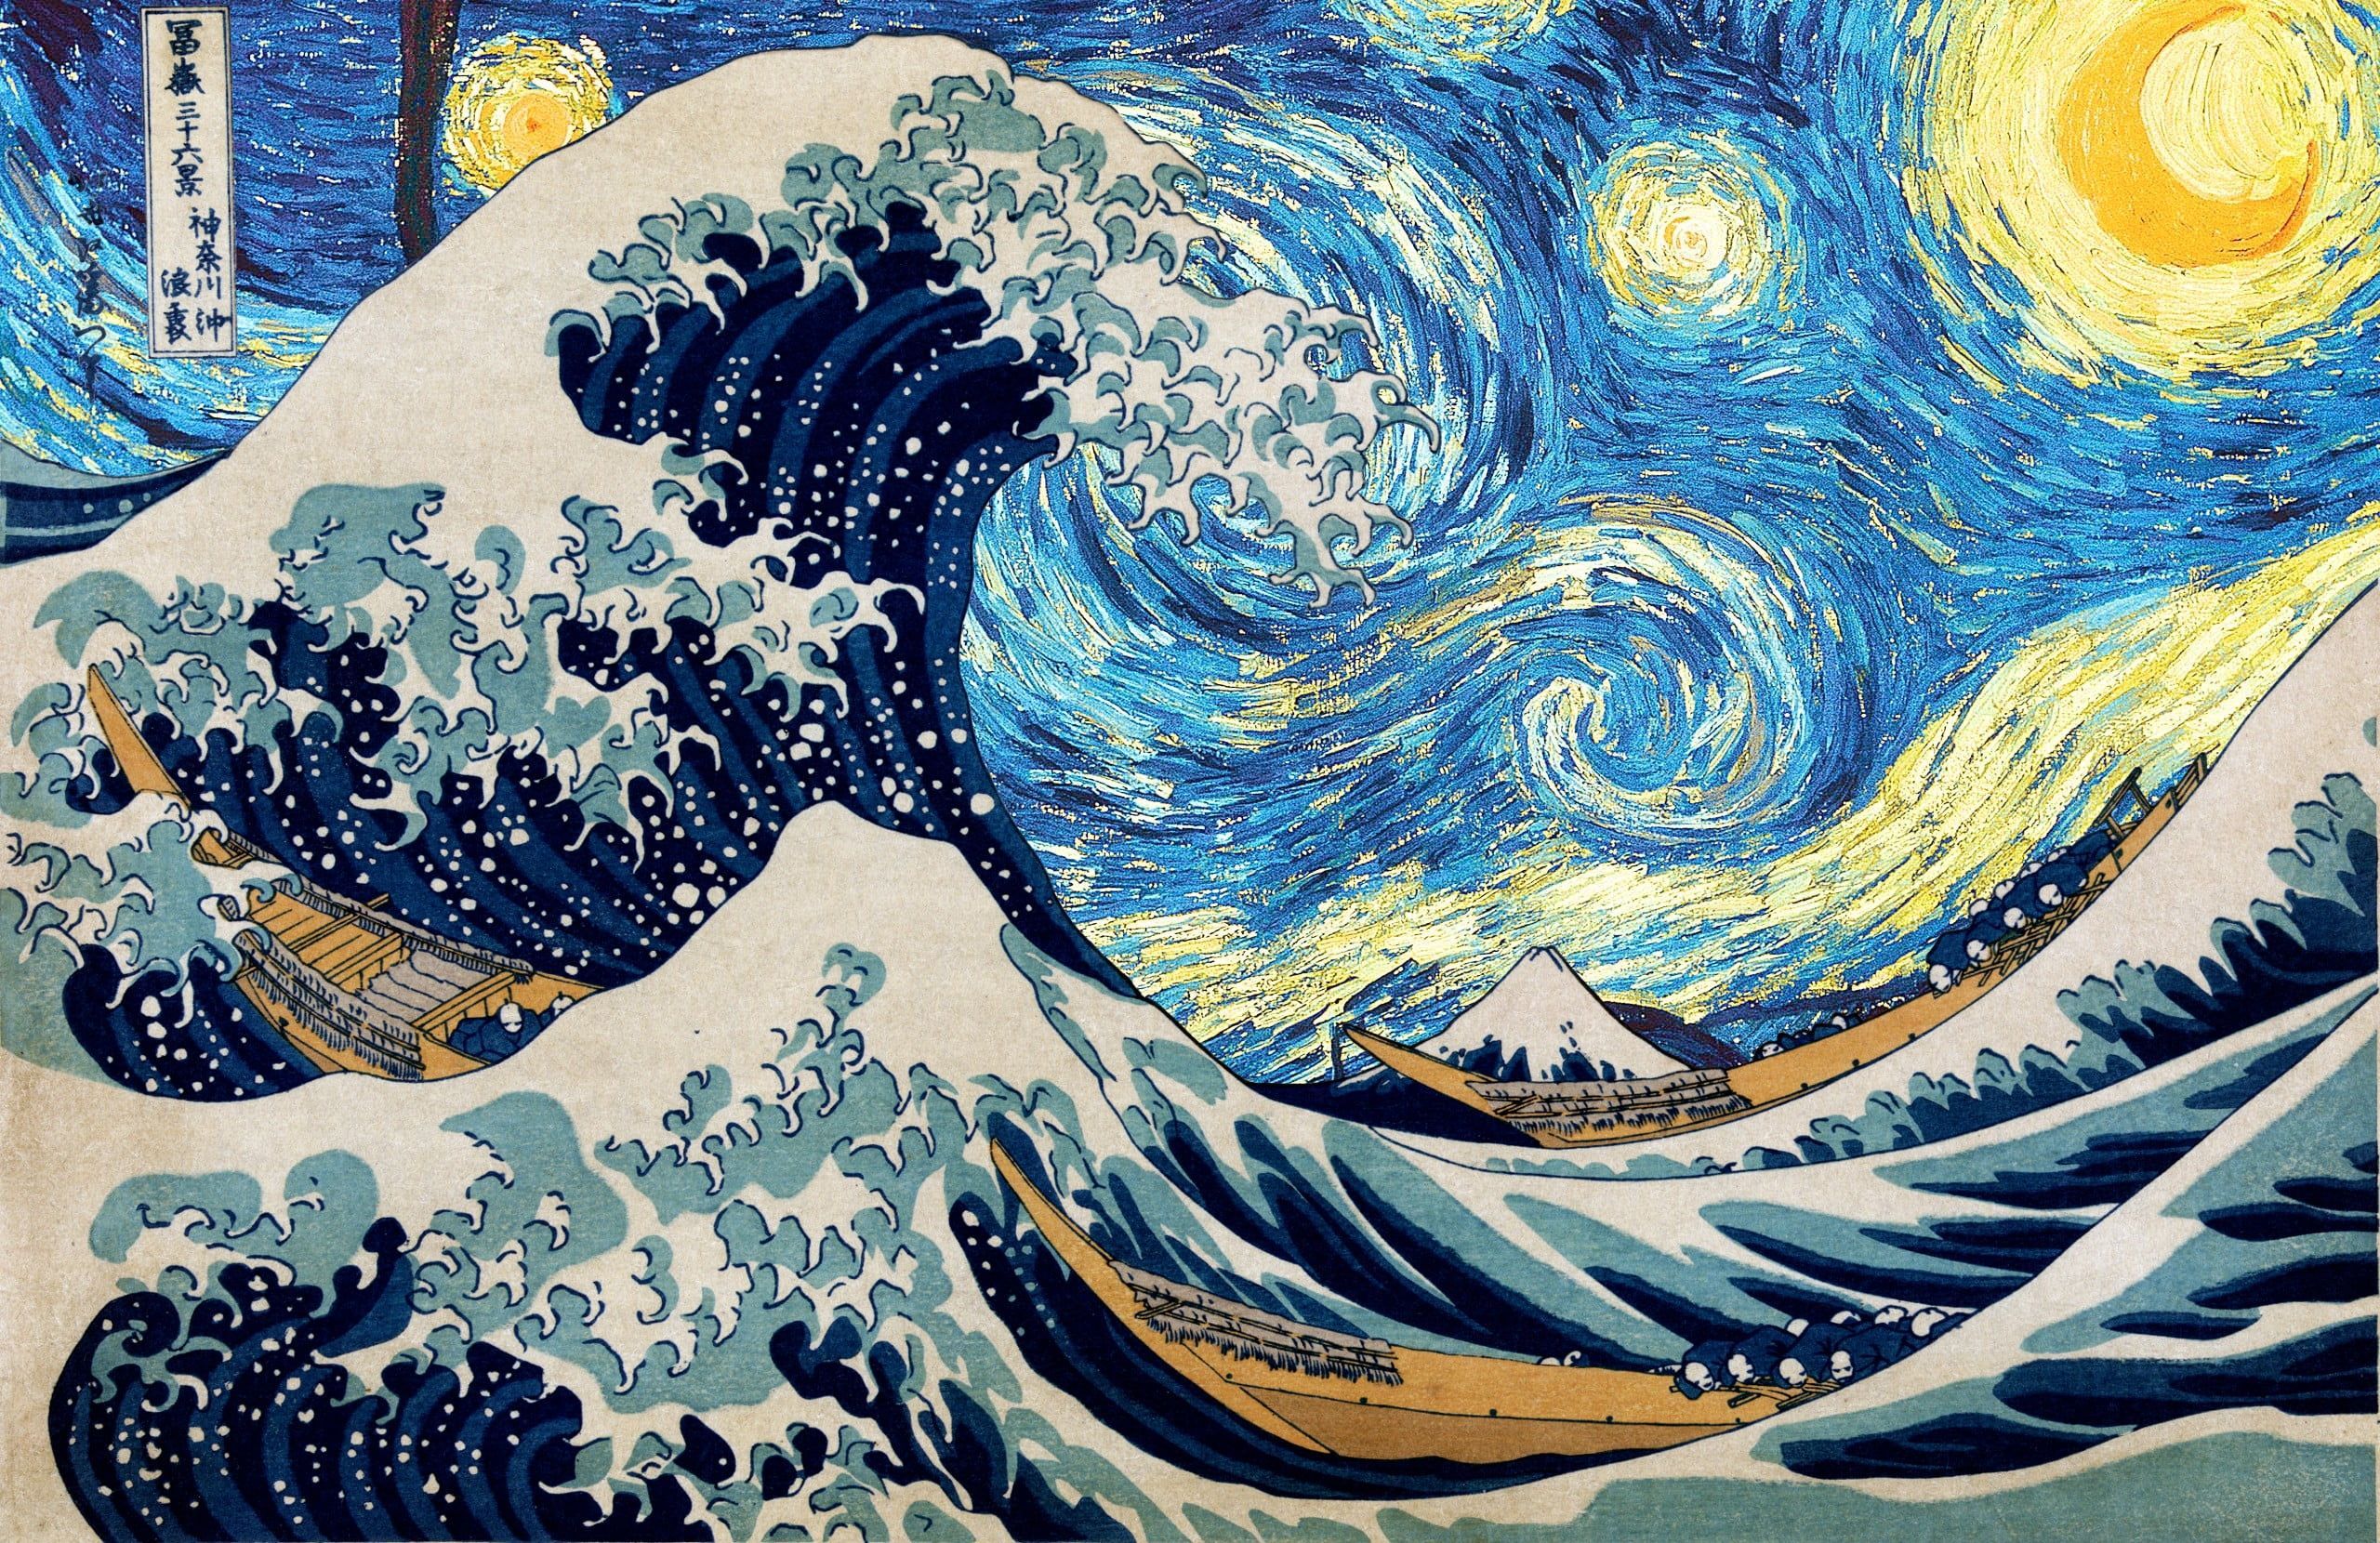 The Great Wave of Kanagawa painting #Hokusai starry night Vincent